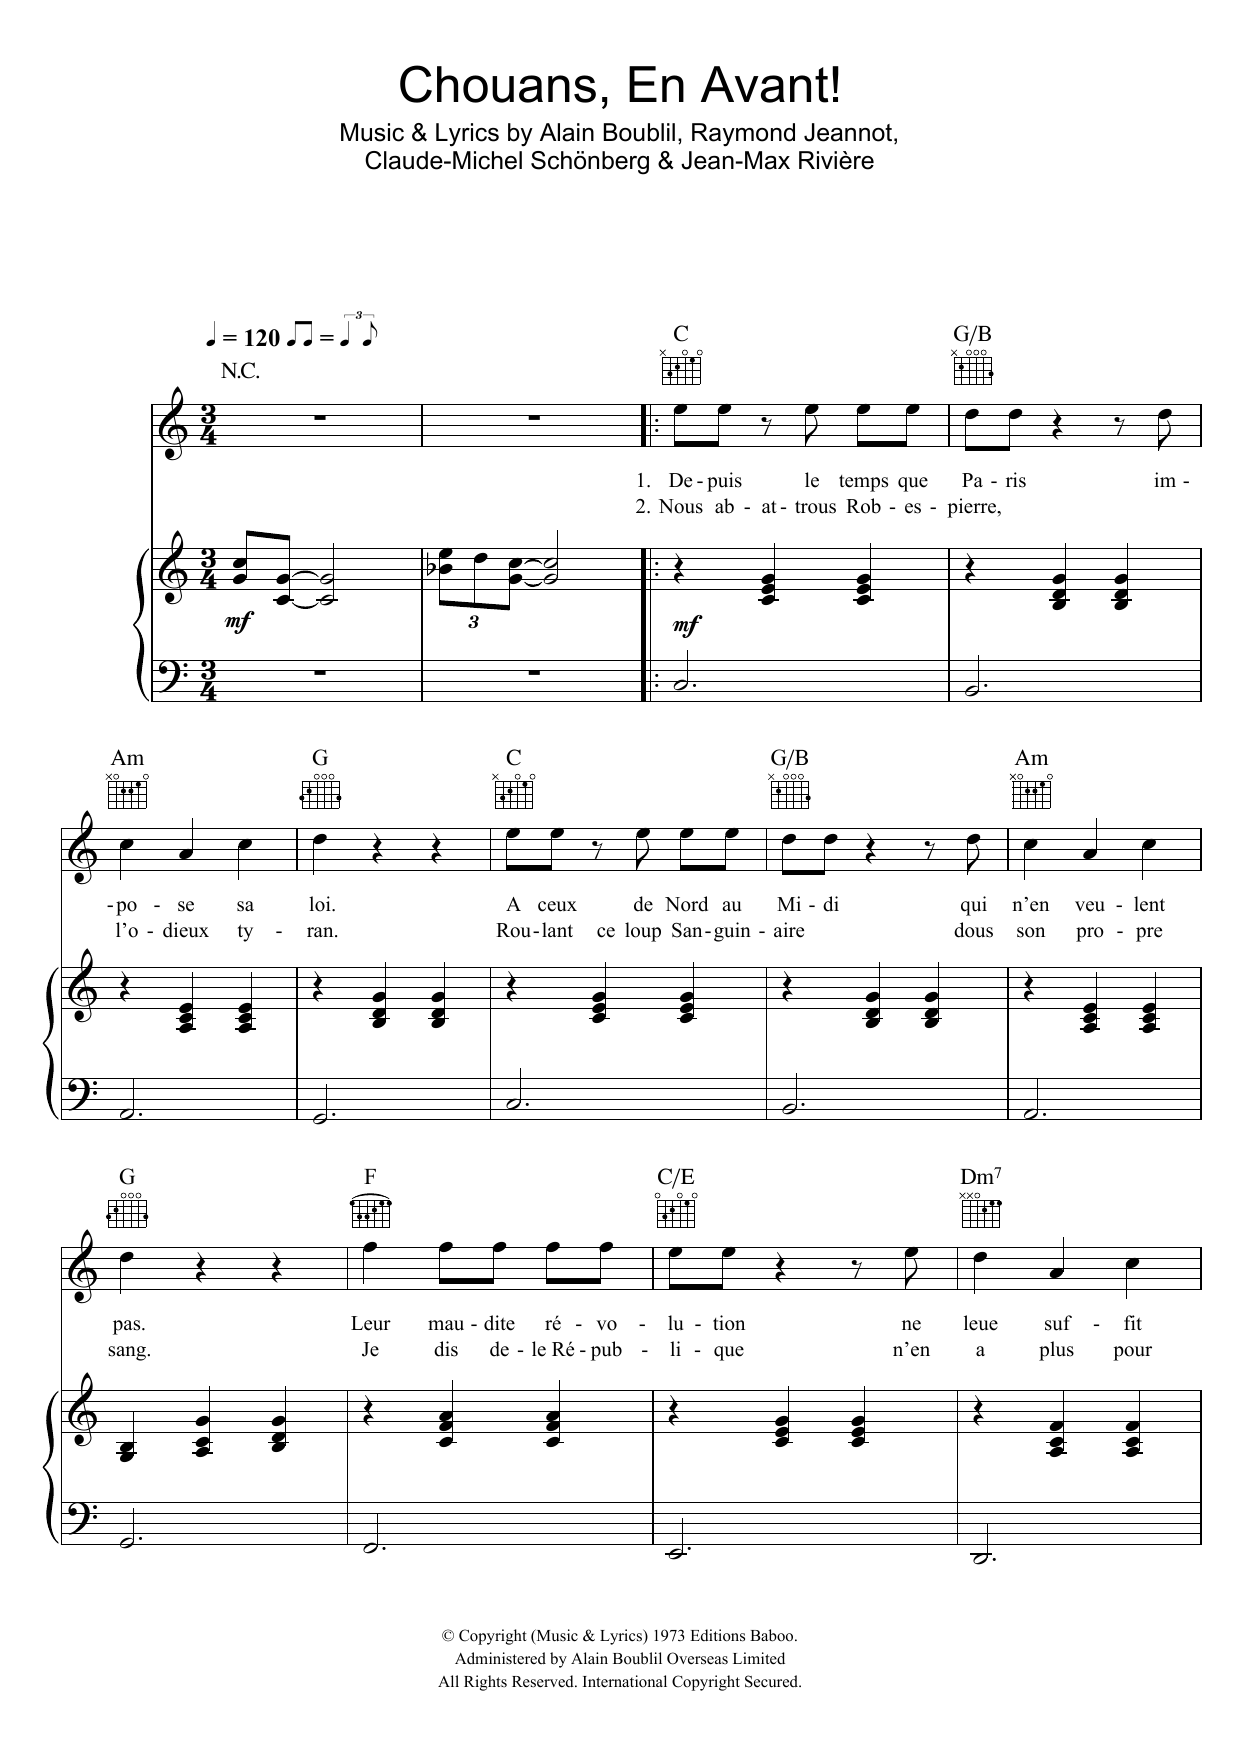 Claude-Michel Schonberg Chouans, En Avant Sheet Music Notes & Chords for Piano, Vocal & Guitar - Download or Print PDF